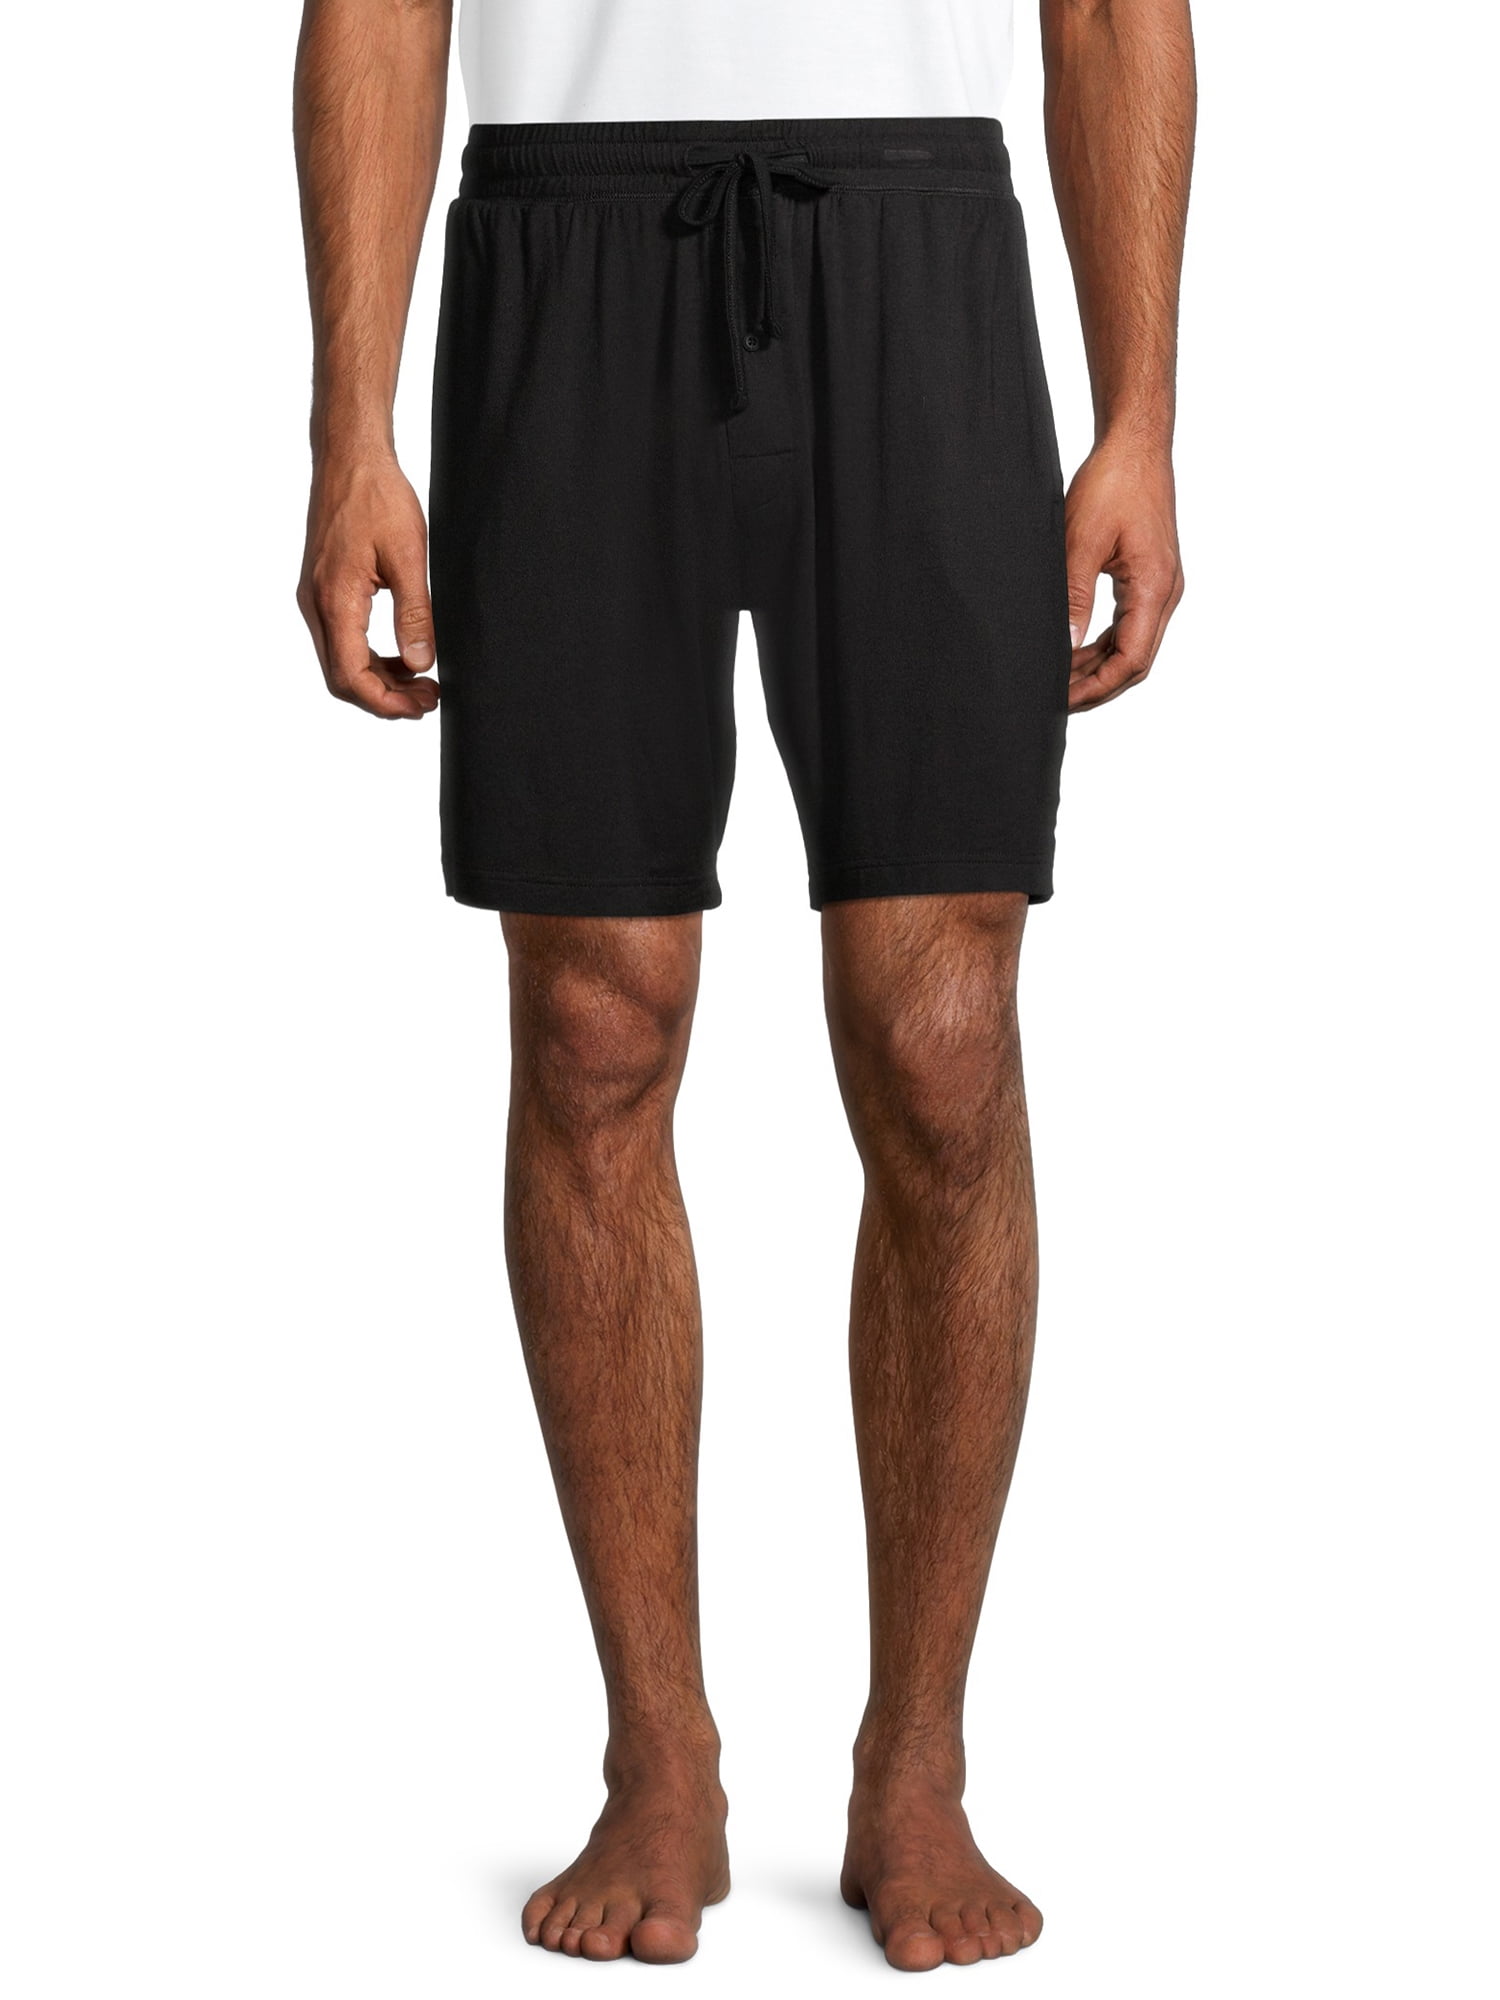 Hanes Men’s Ultrasoft Modal Stretch Cozy Pajama Shorts